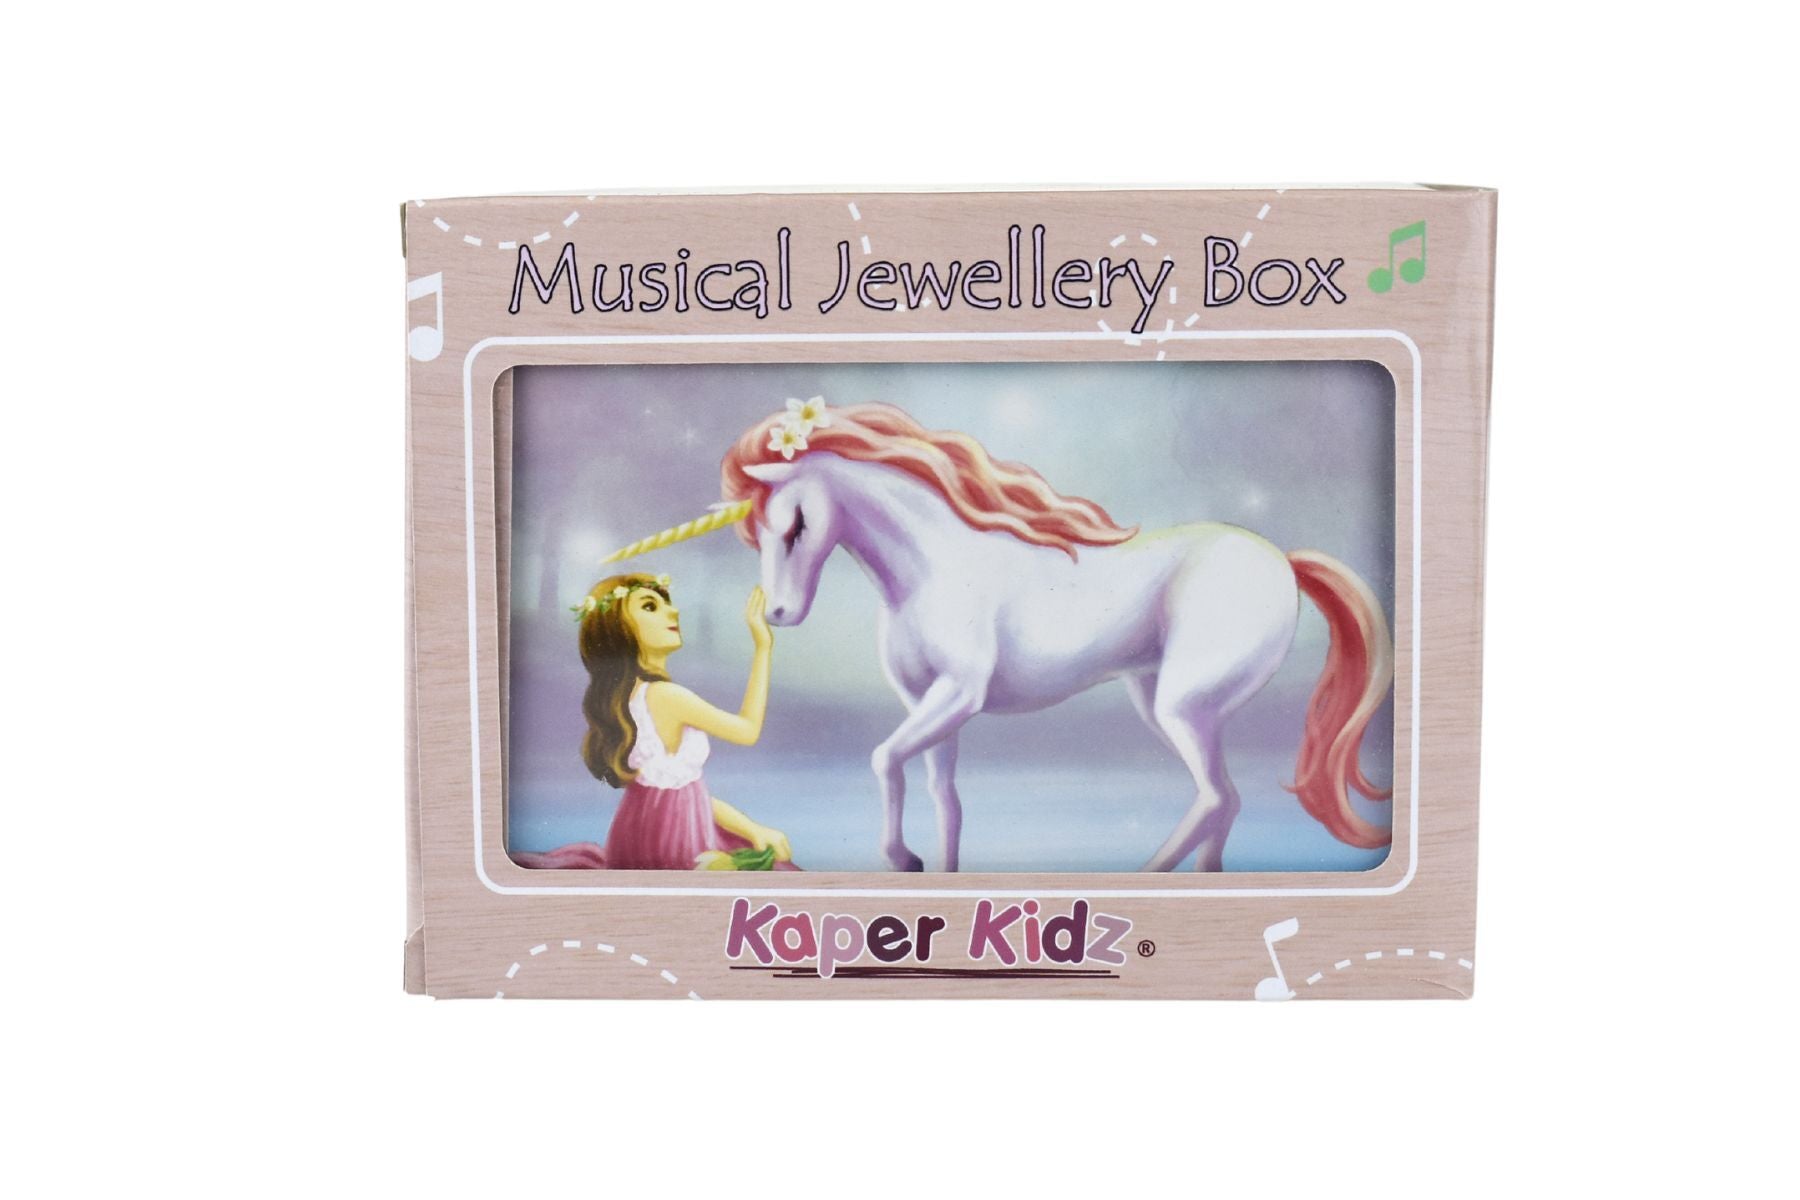 Packaging Image of Sugarplum Unicorn Keepsake Music Jewellery Box